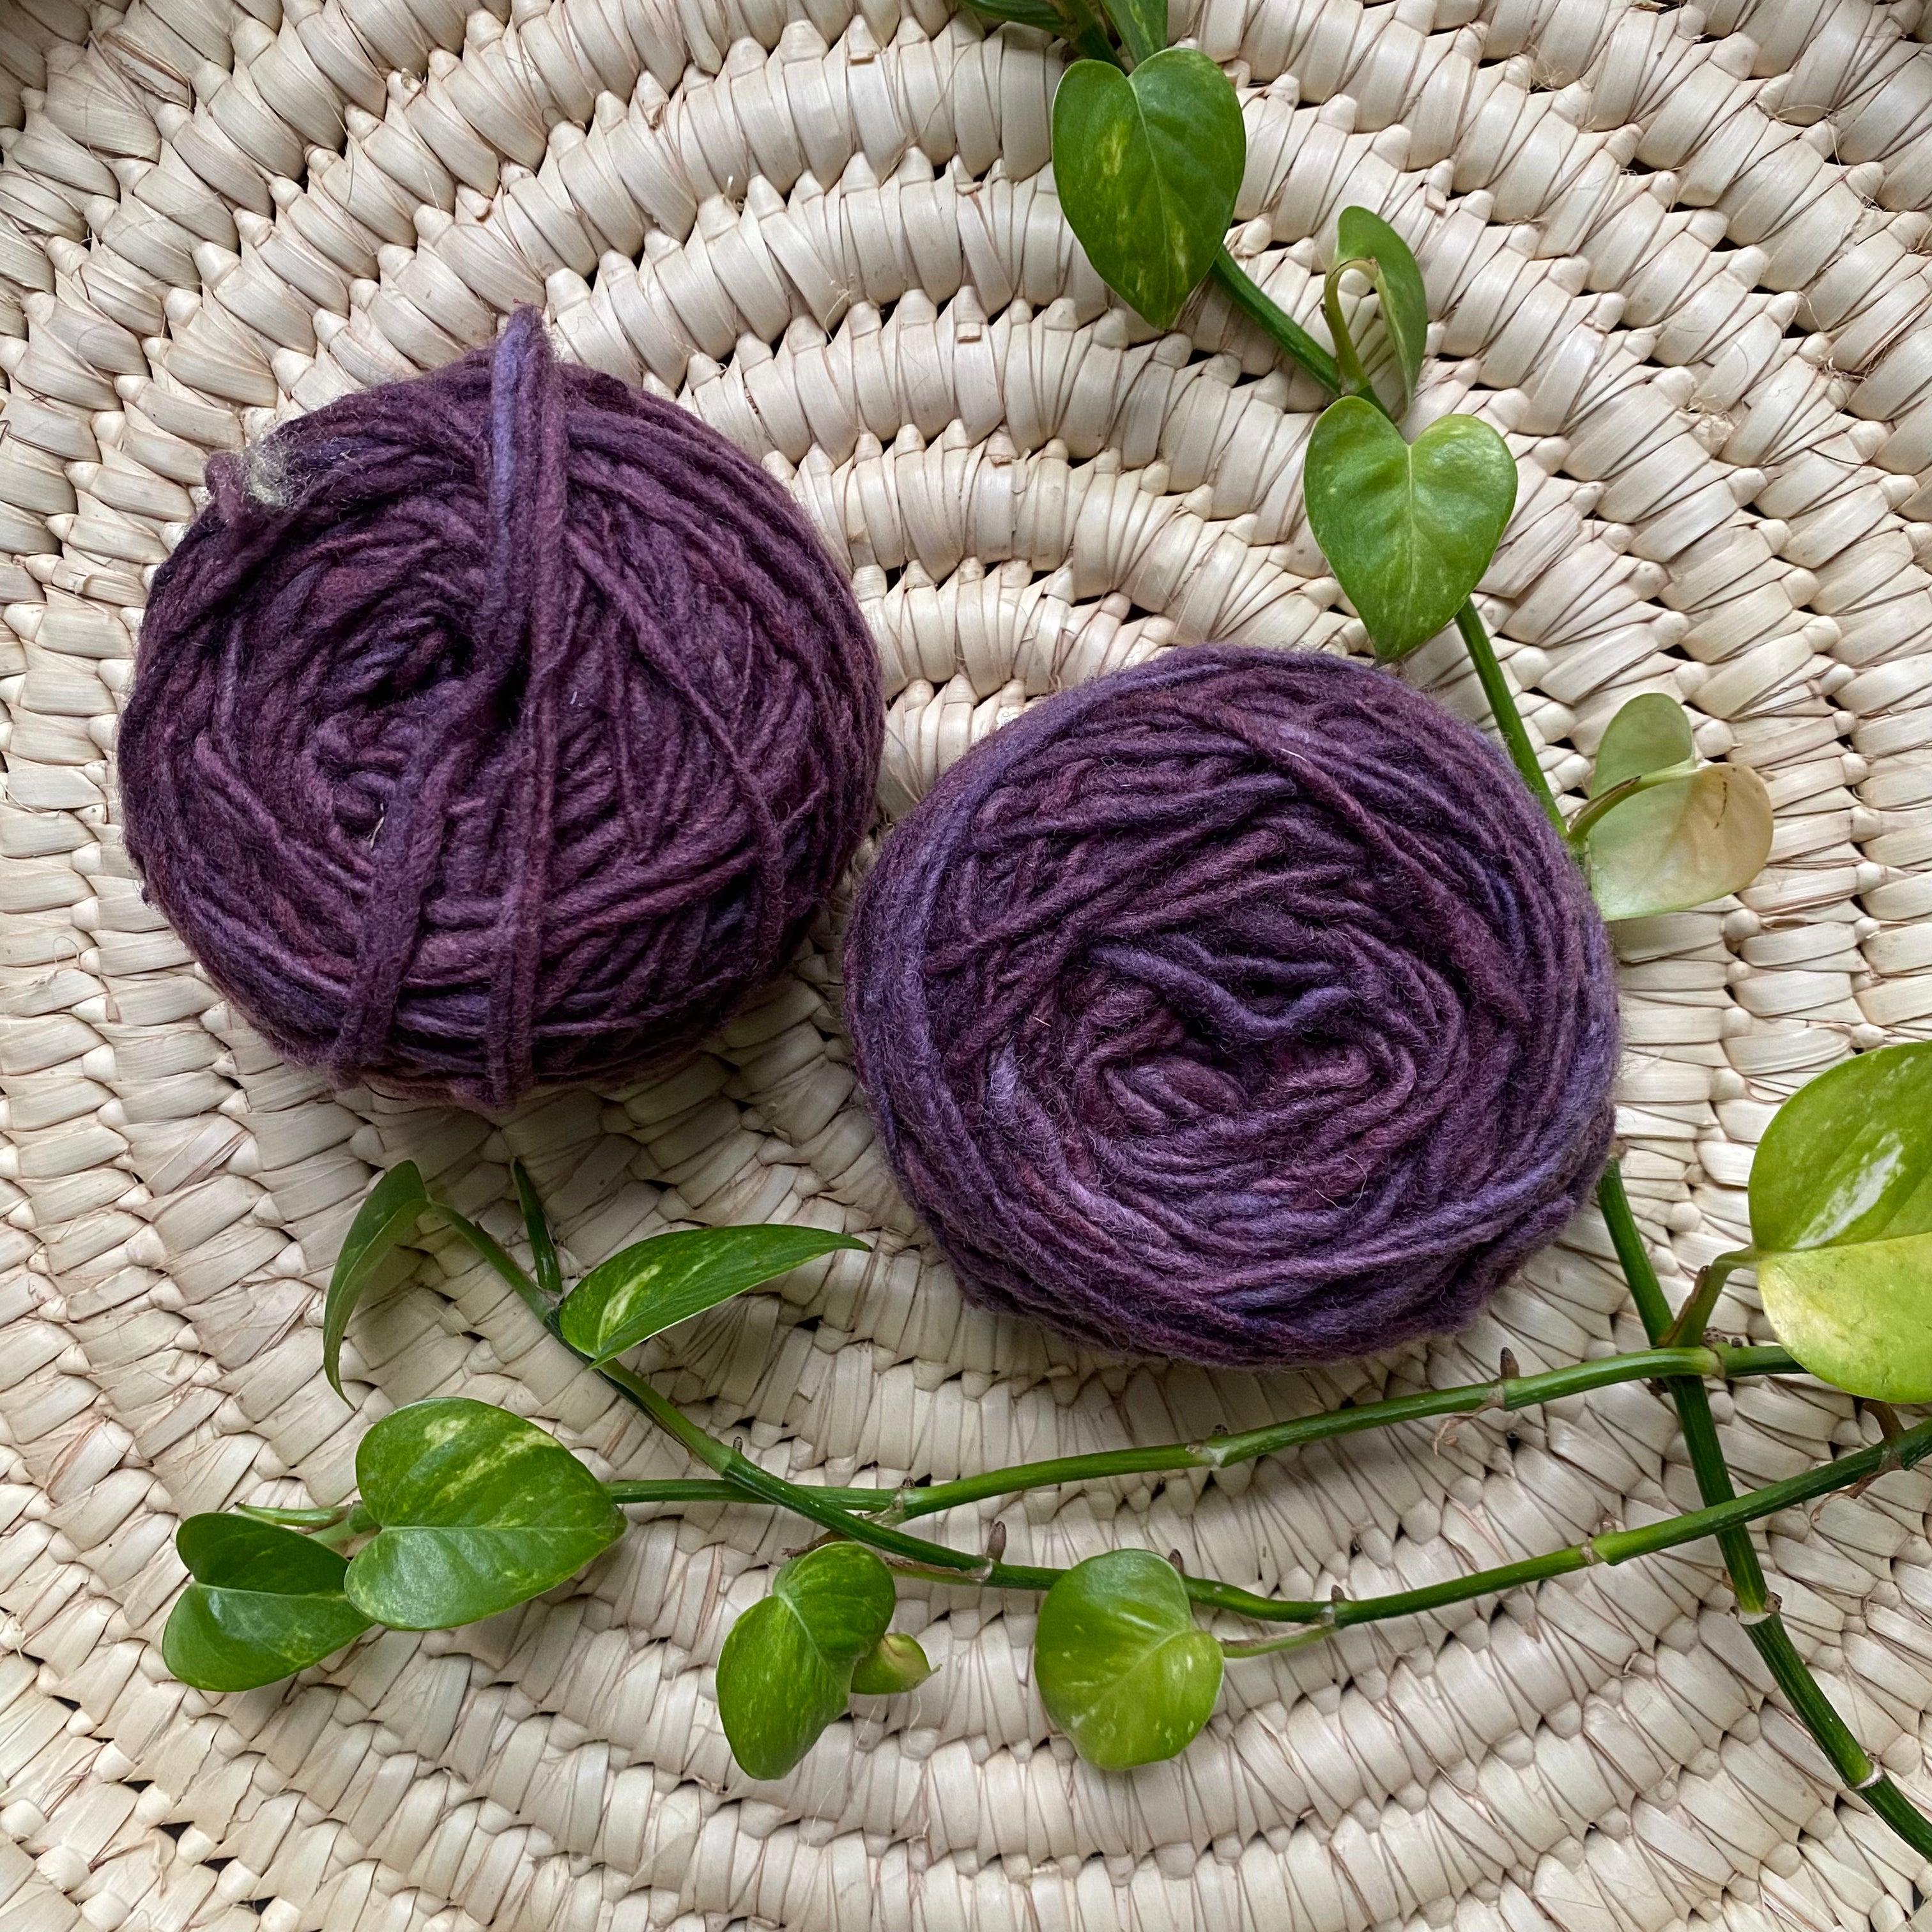 Display of purple colored yarn